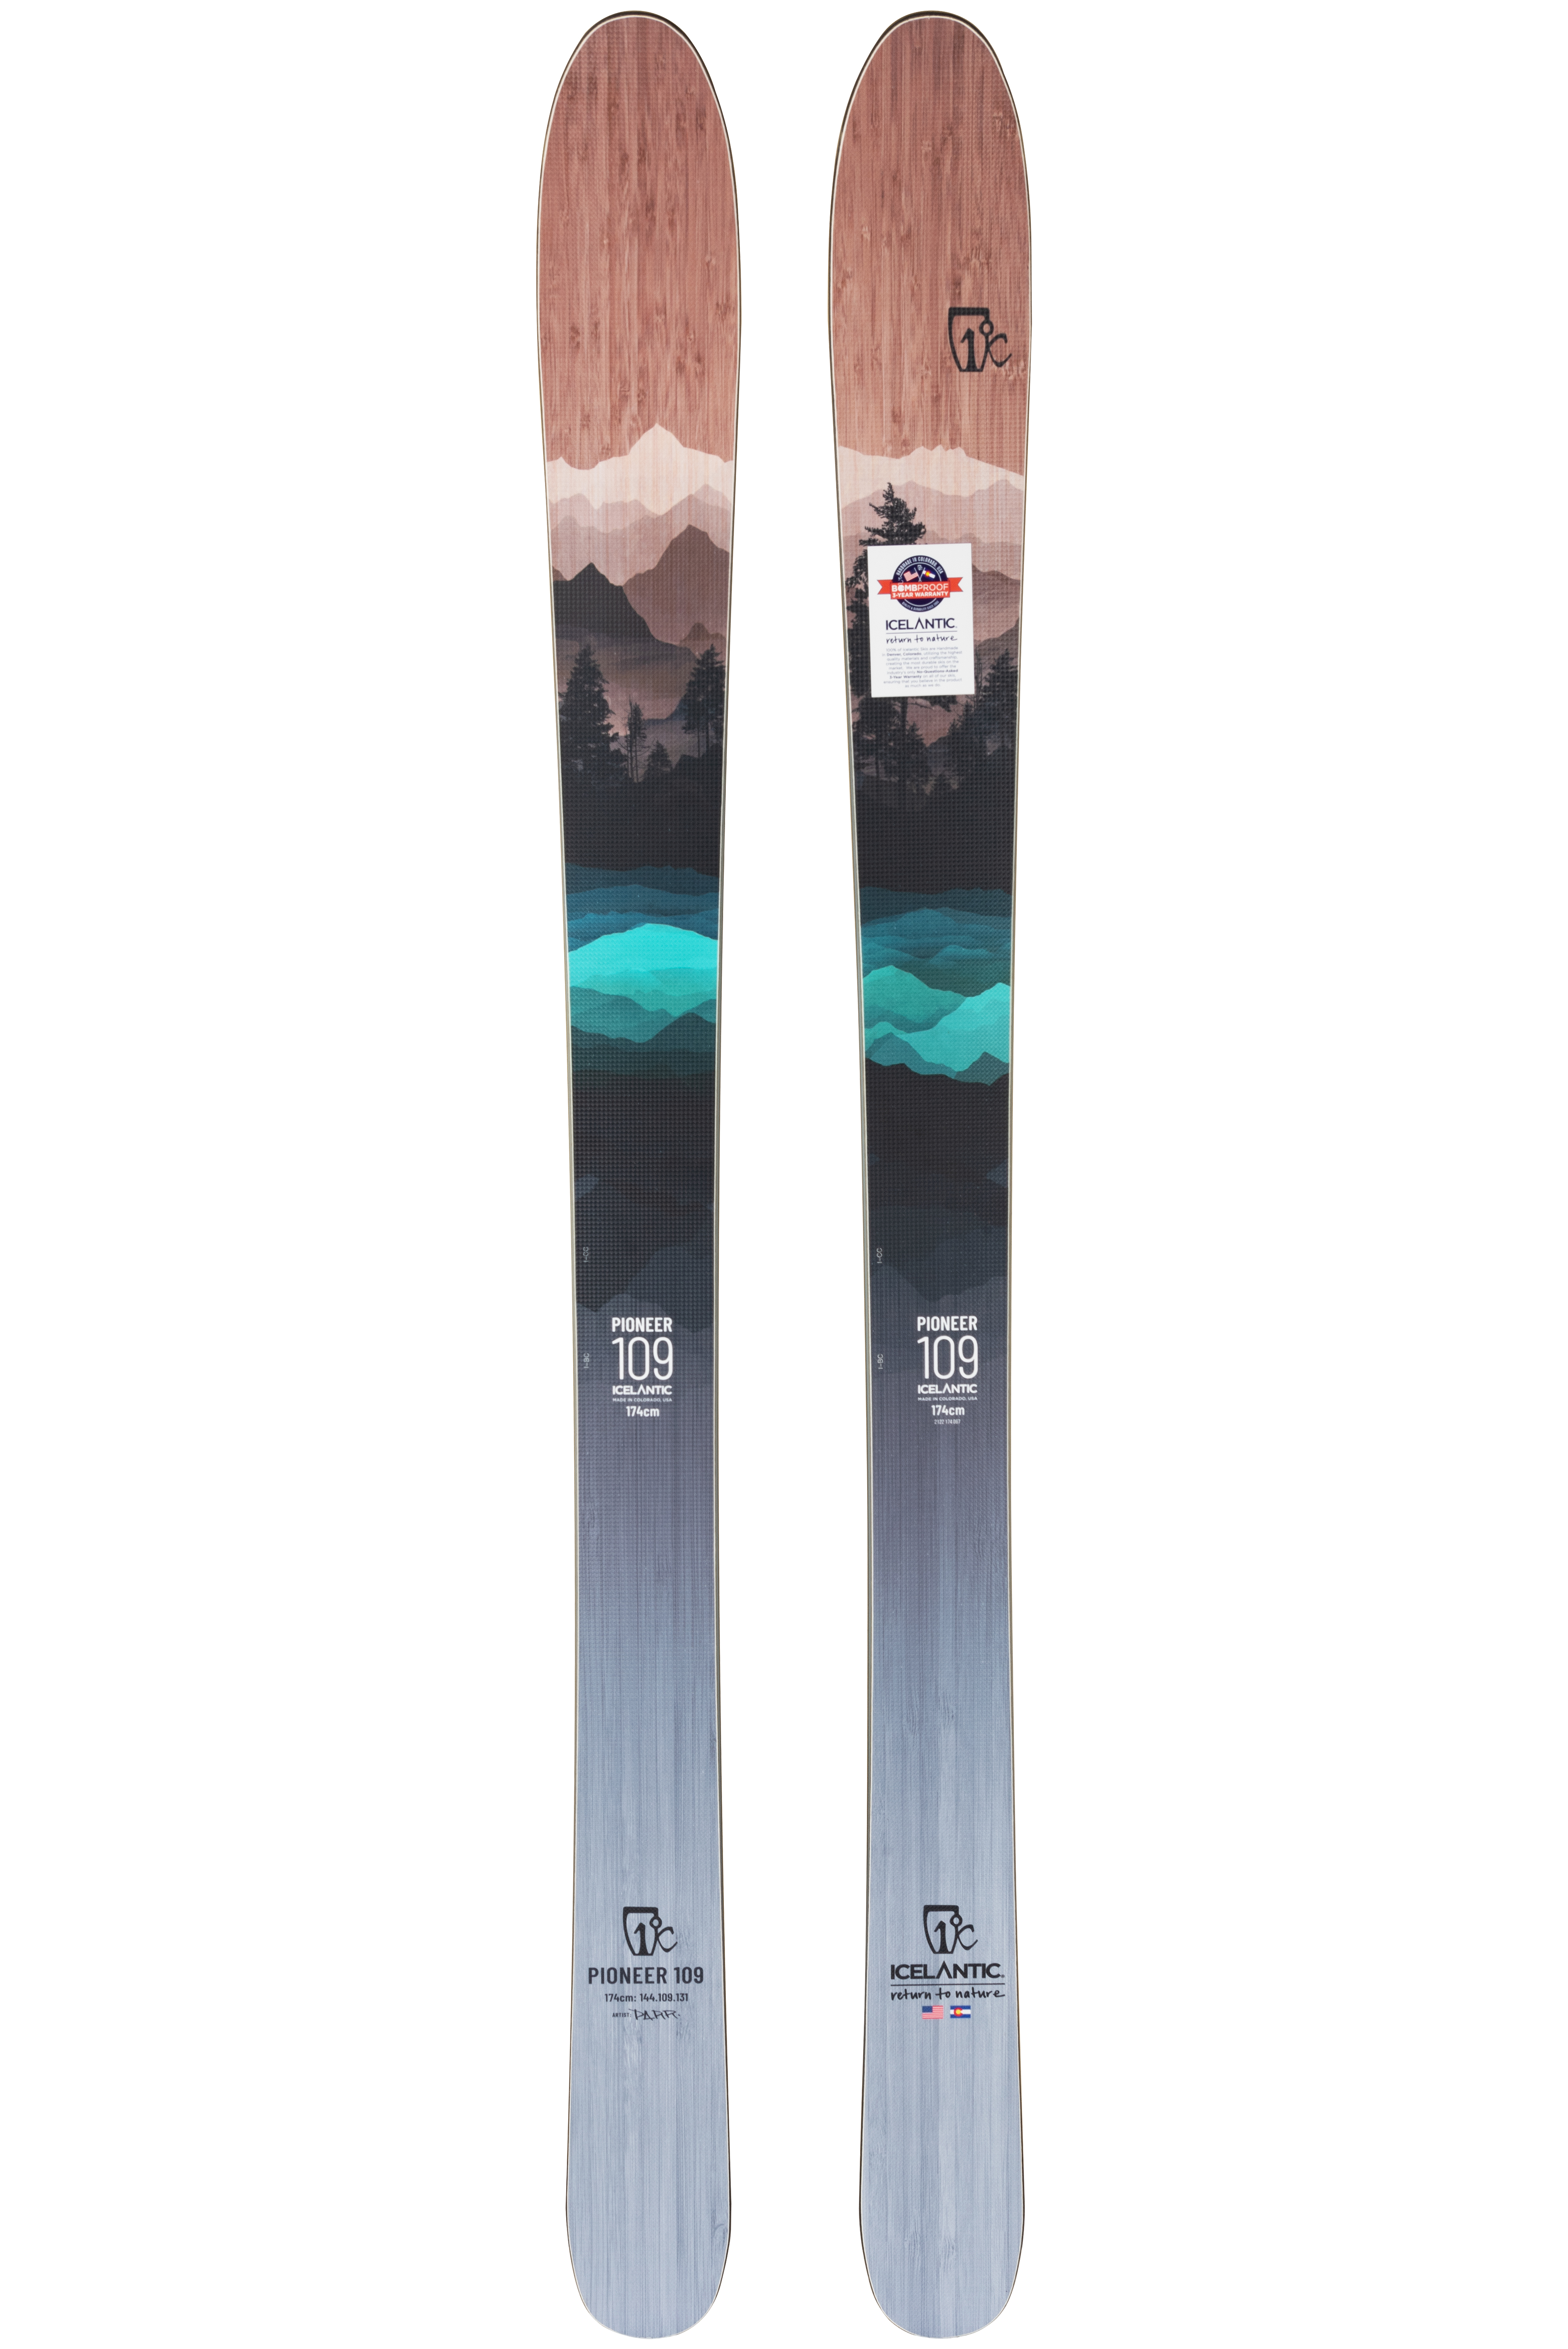 Лыжи средней жесткости Icelantic Pioneer 109 2021/2022 182cm